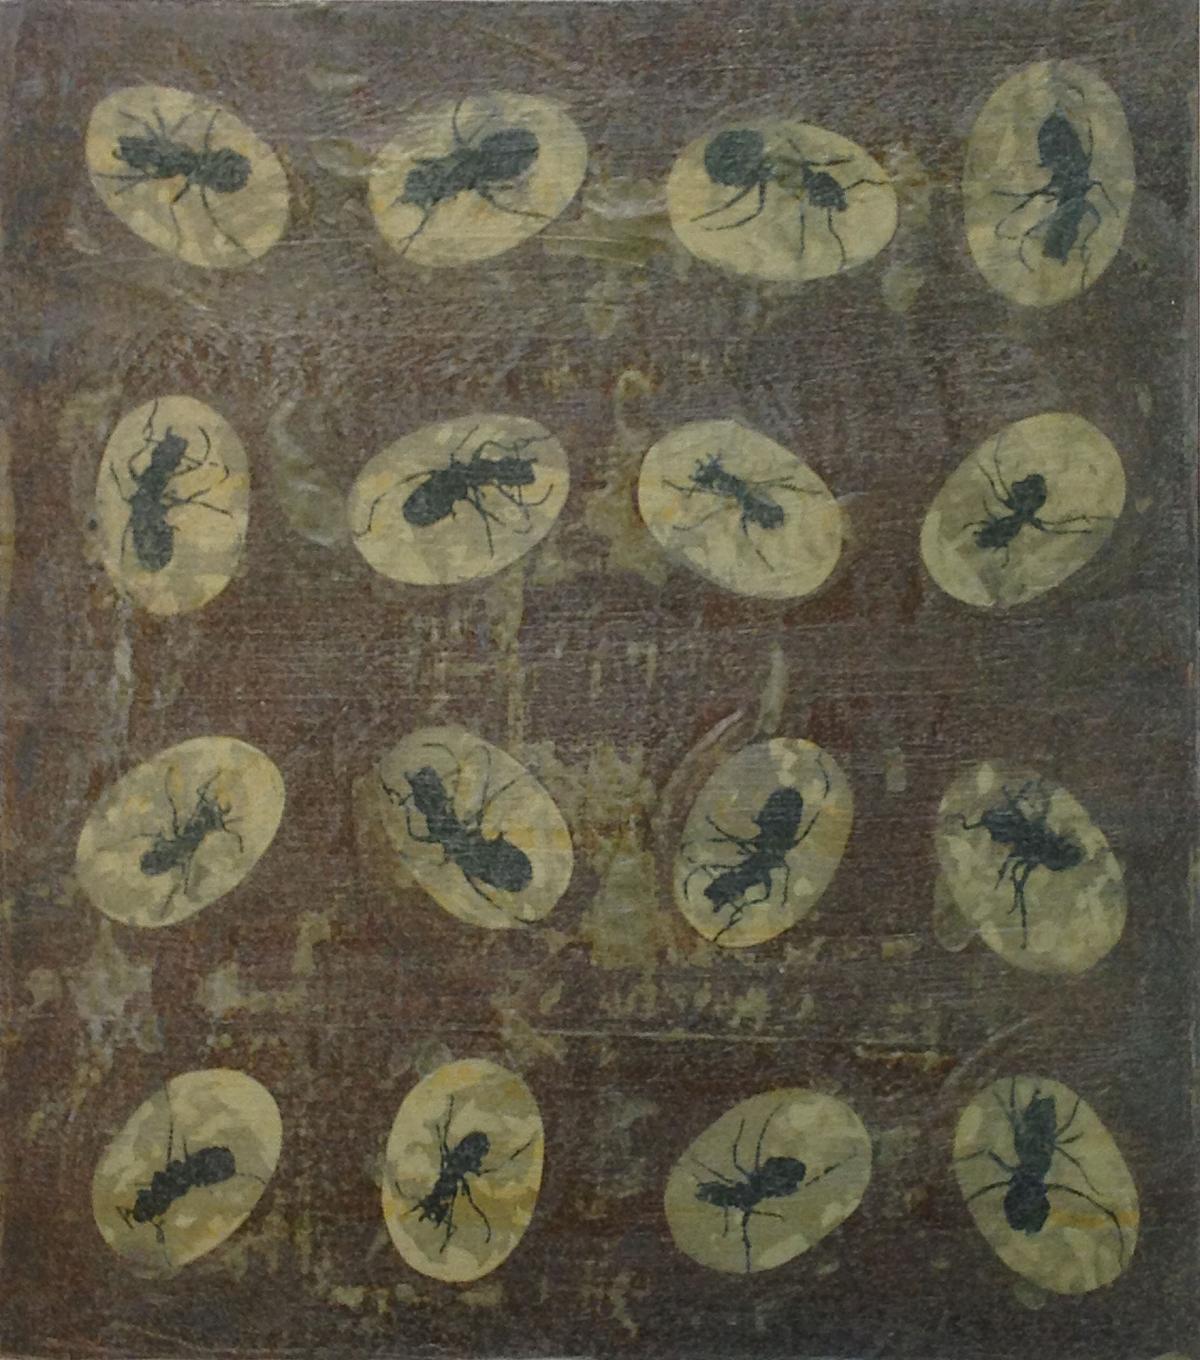 Fächer Gitter Flügel 4, 2000, Acryl und Wachs auf Holz, 50 x 44 cm